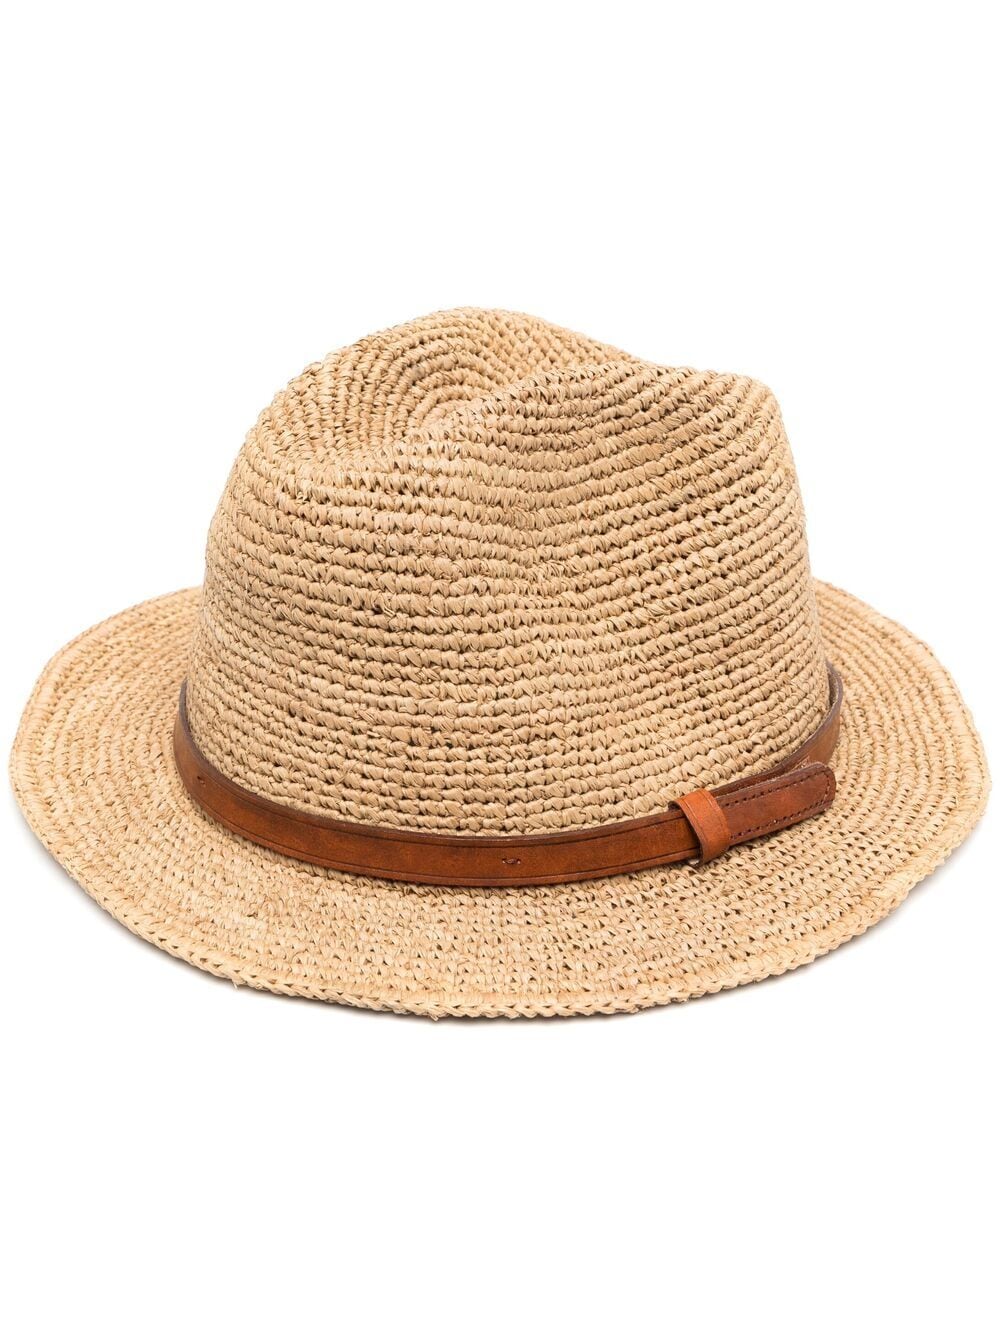 Lubeman woven straw hat